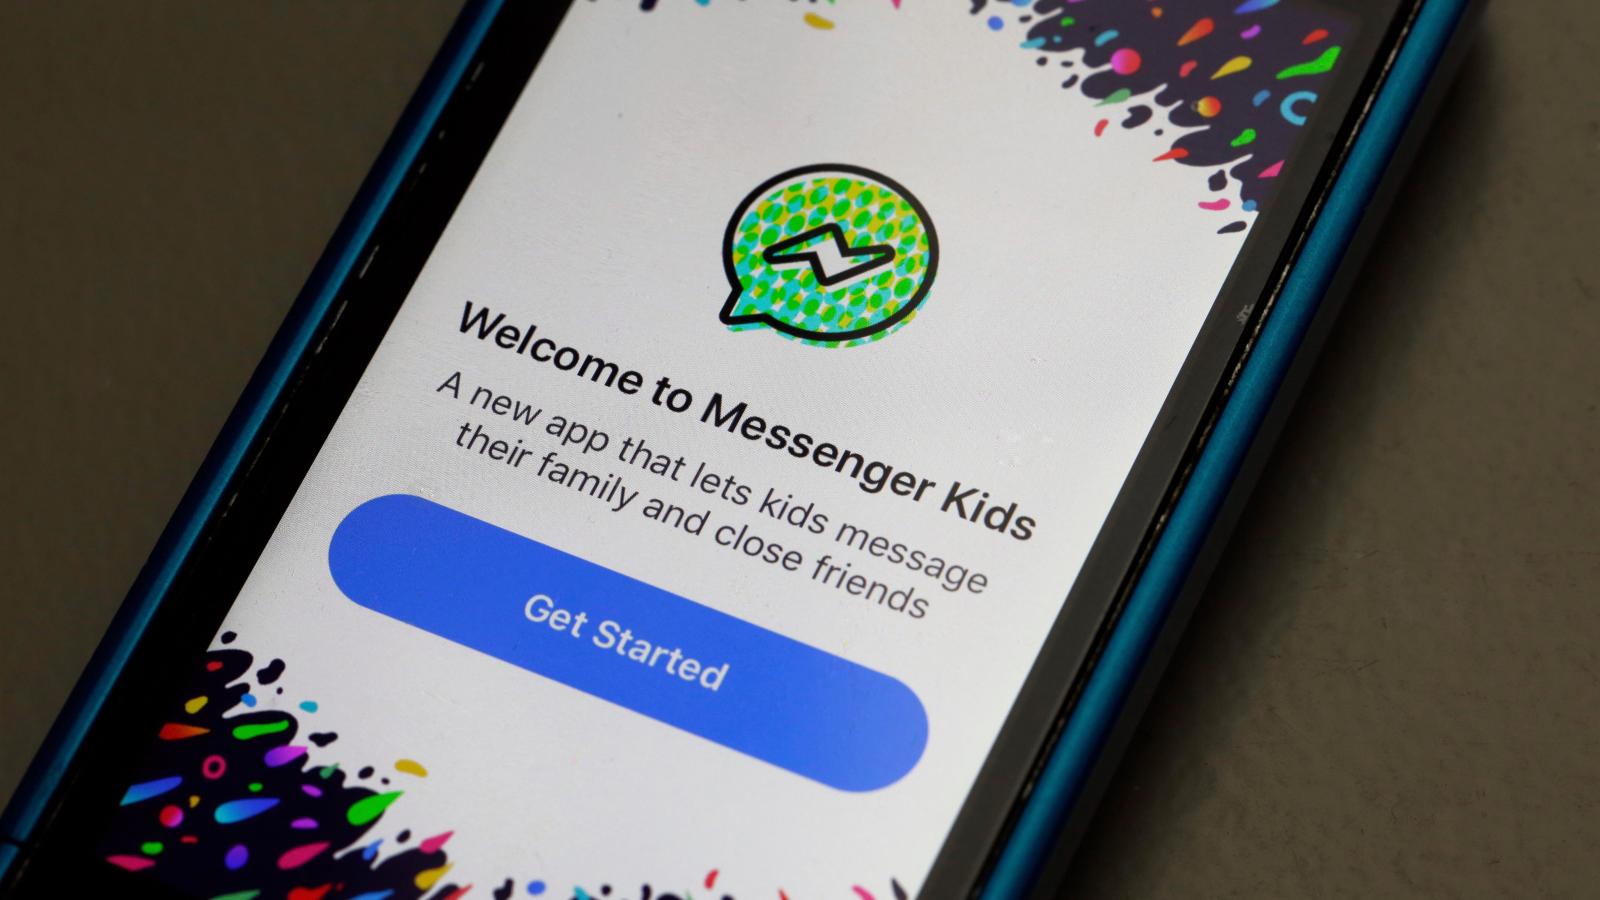 Get Started with Messenger Kids App by Facebook